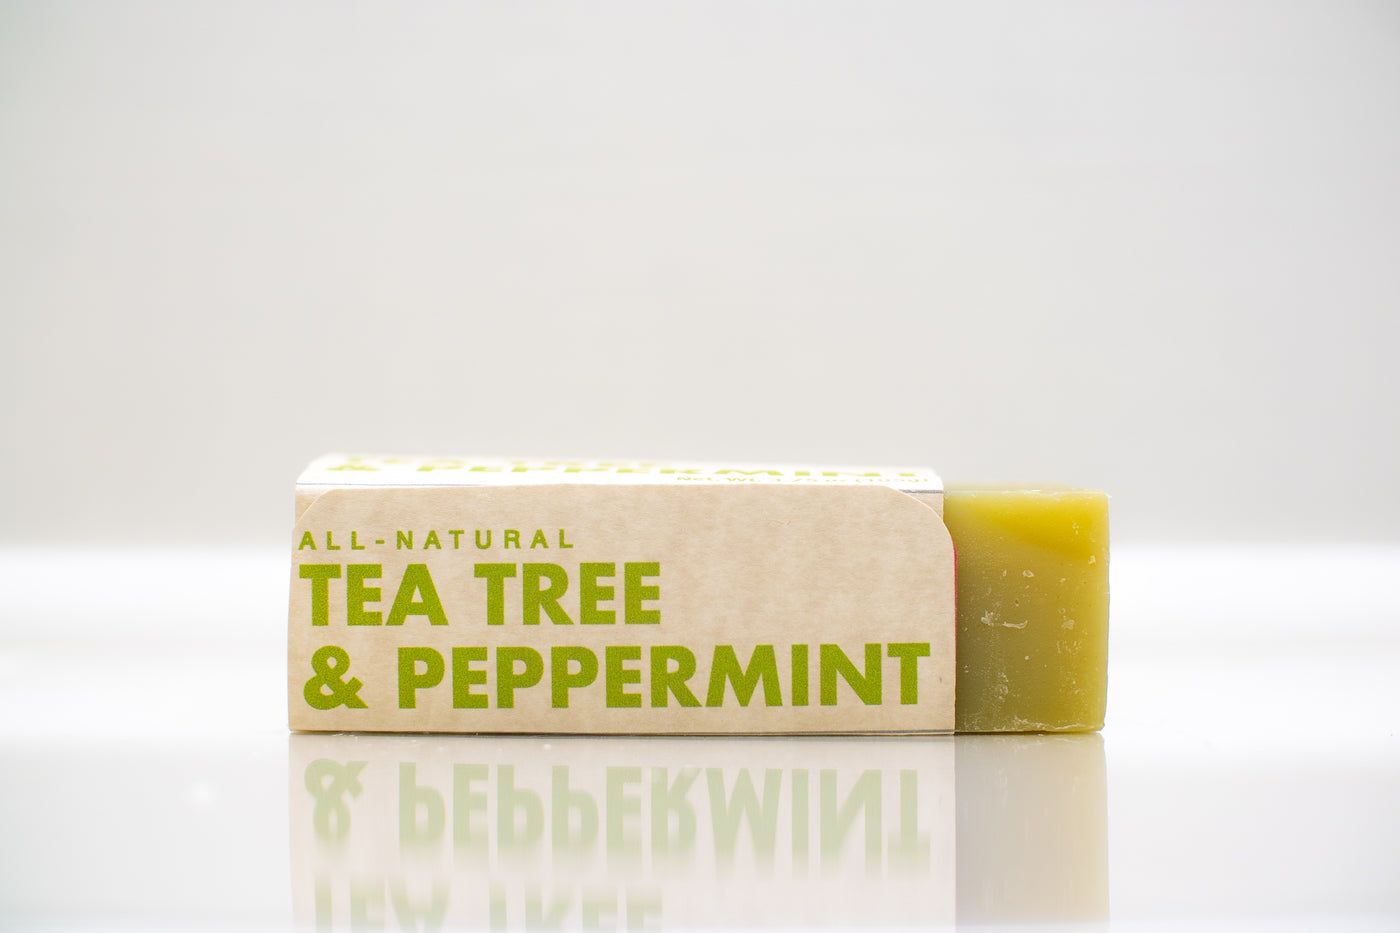 Derek Product- Organic Tea Tree & Peppermint Herbal Soap Bar Long Lasting 3.75 oz (105g) - DerekProduct